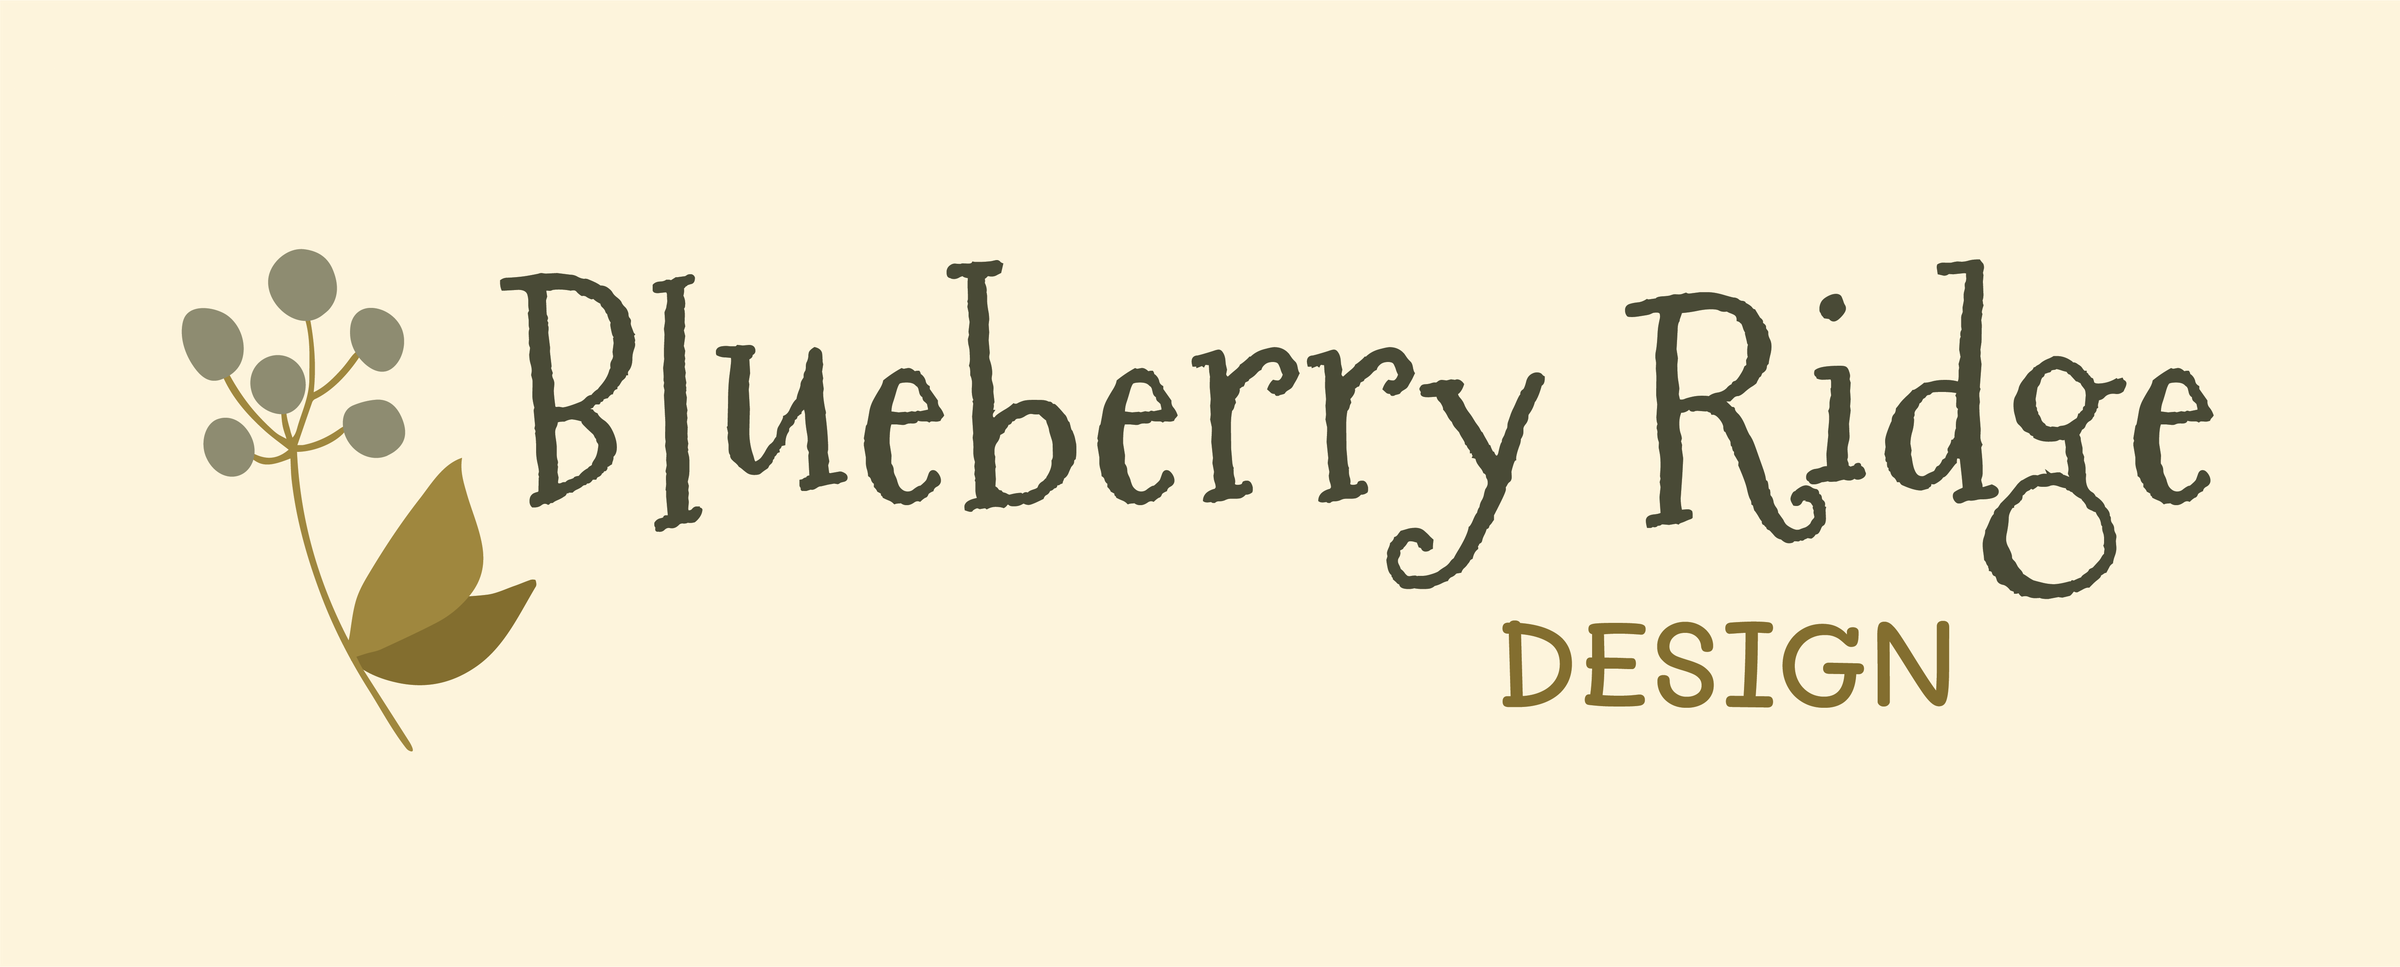 Blueberry Ridge Designs